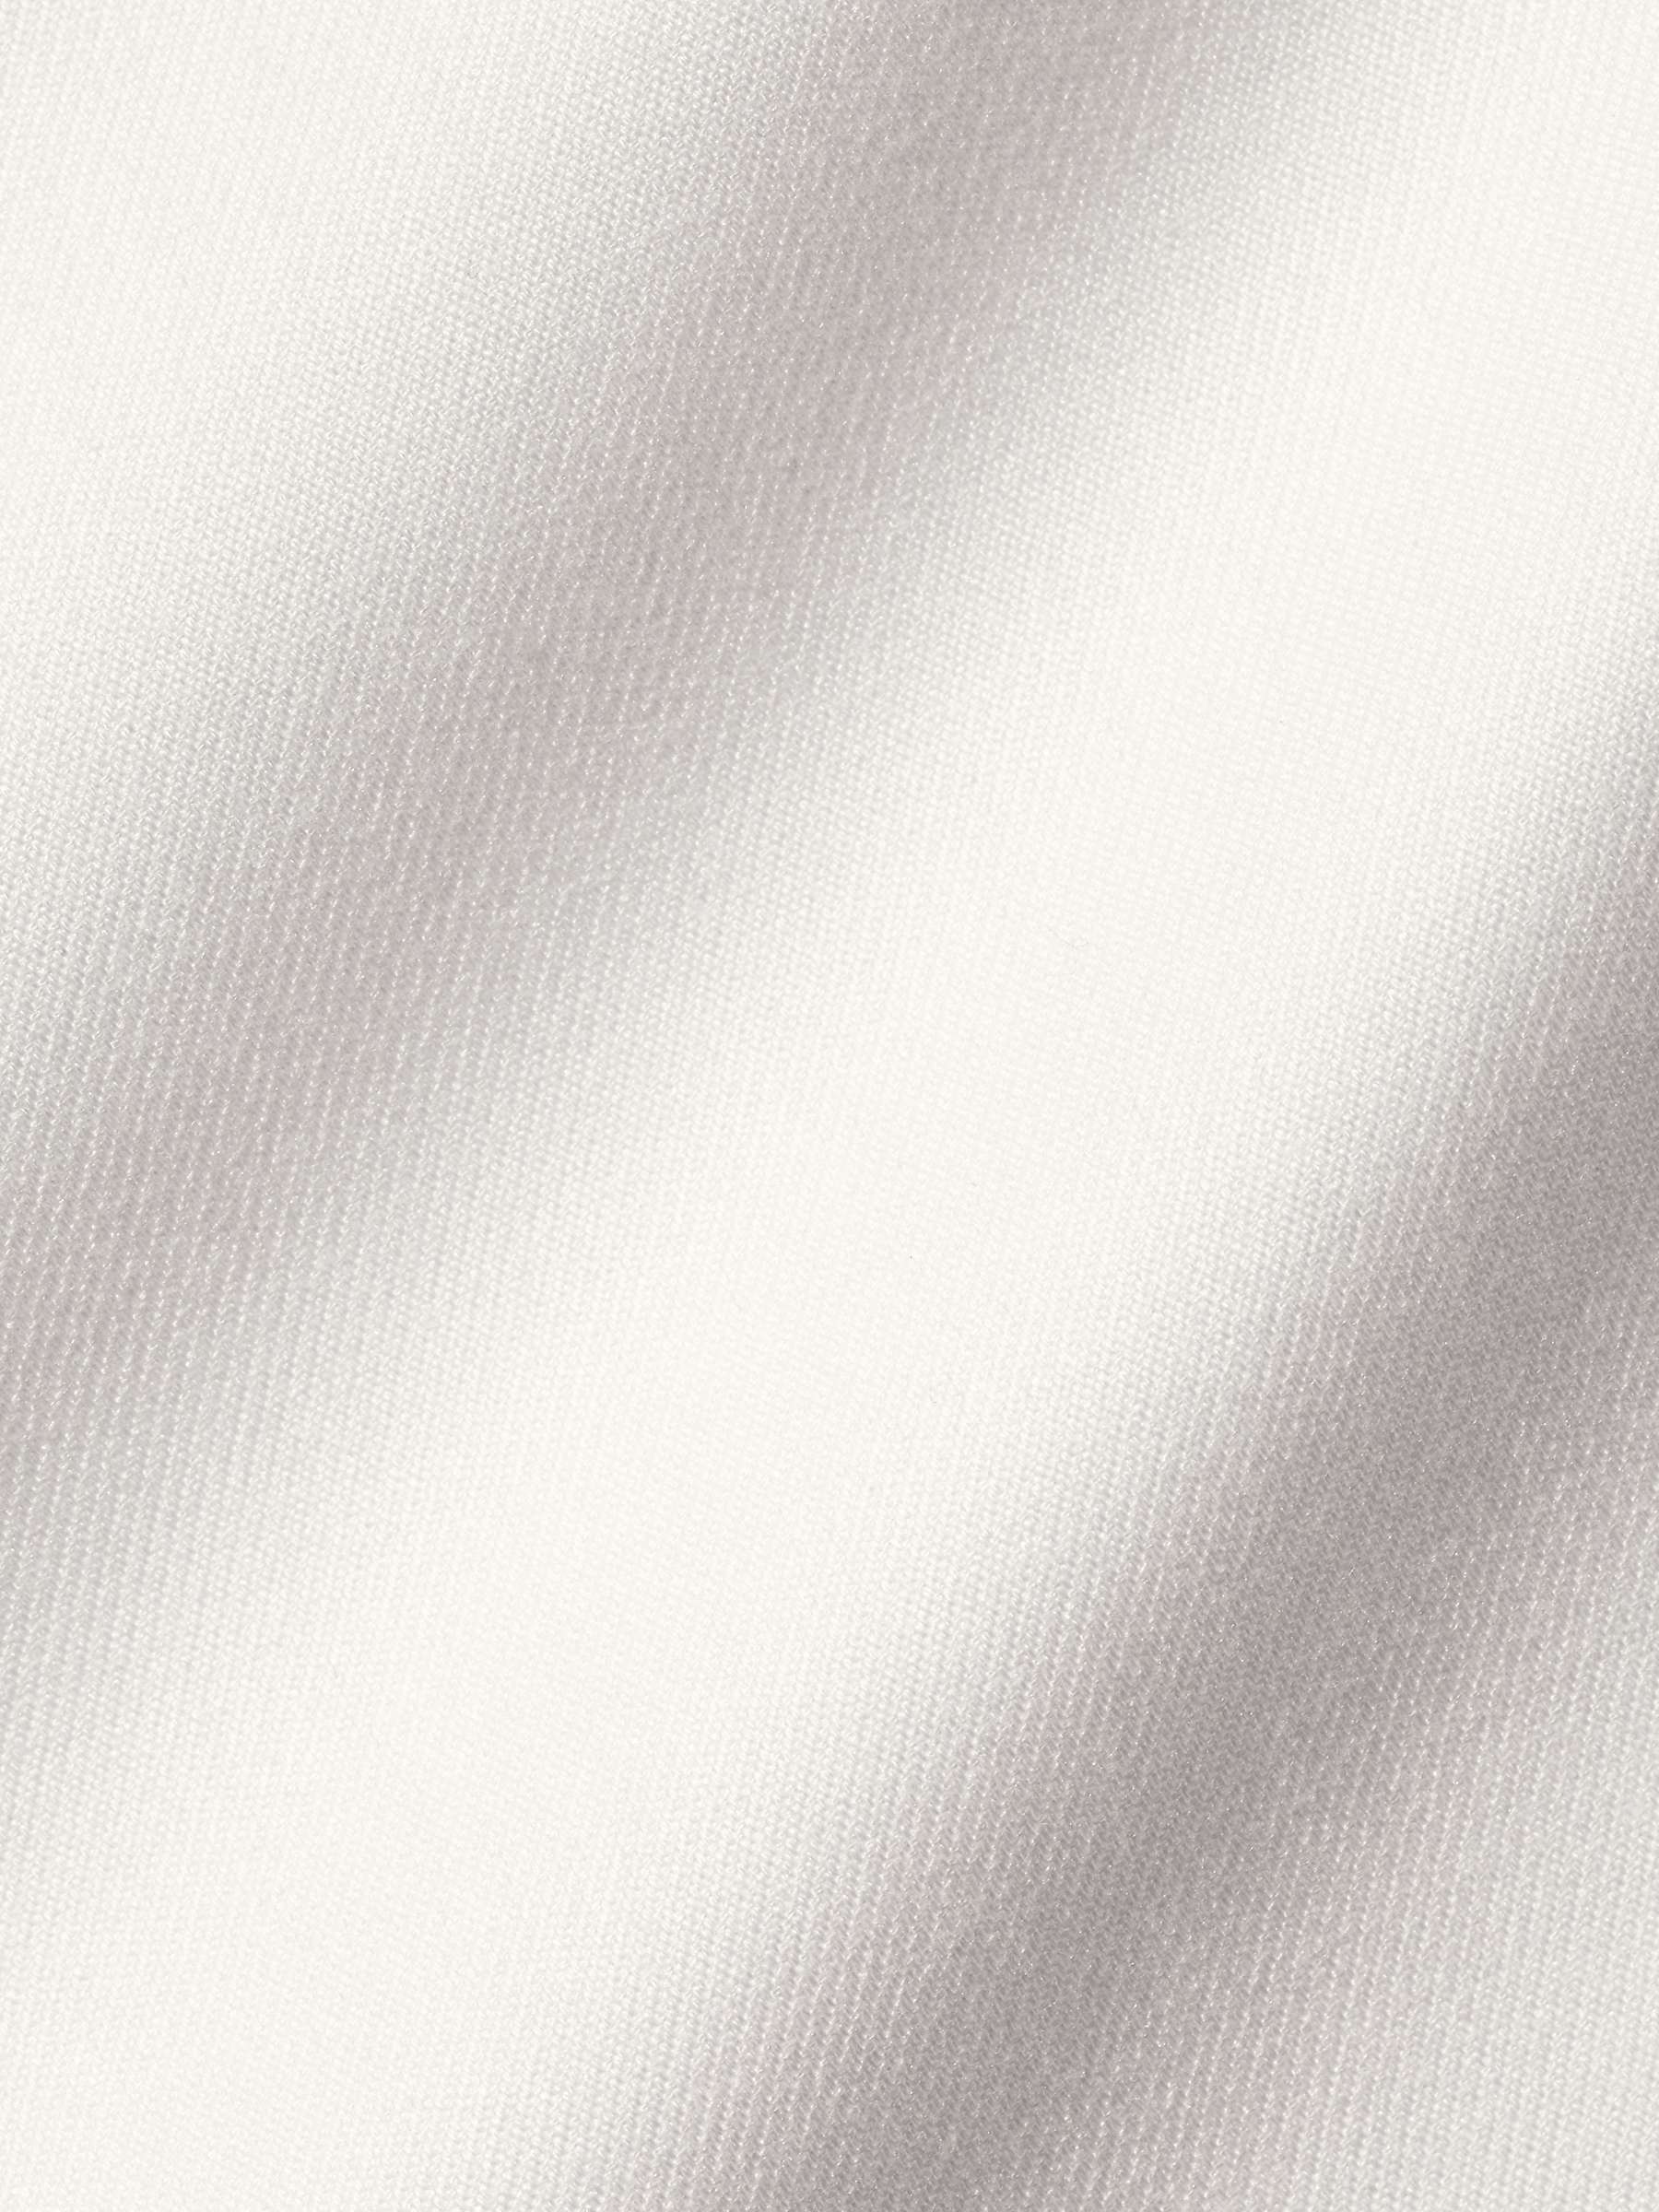 Buy Charles Tyrwhitt Cotton Single Cuff Shirt, Ivory Online at johnlewis.com